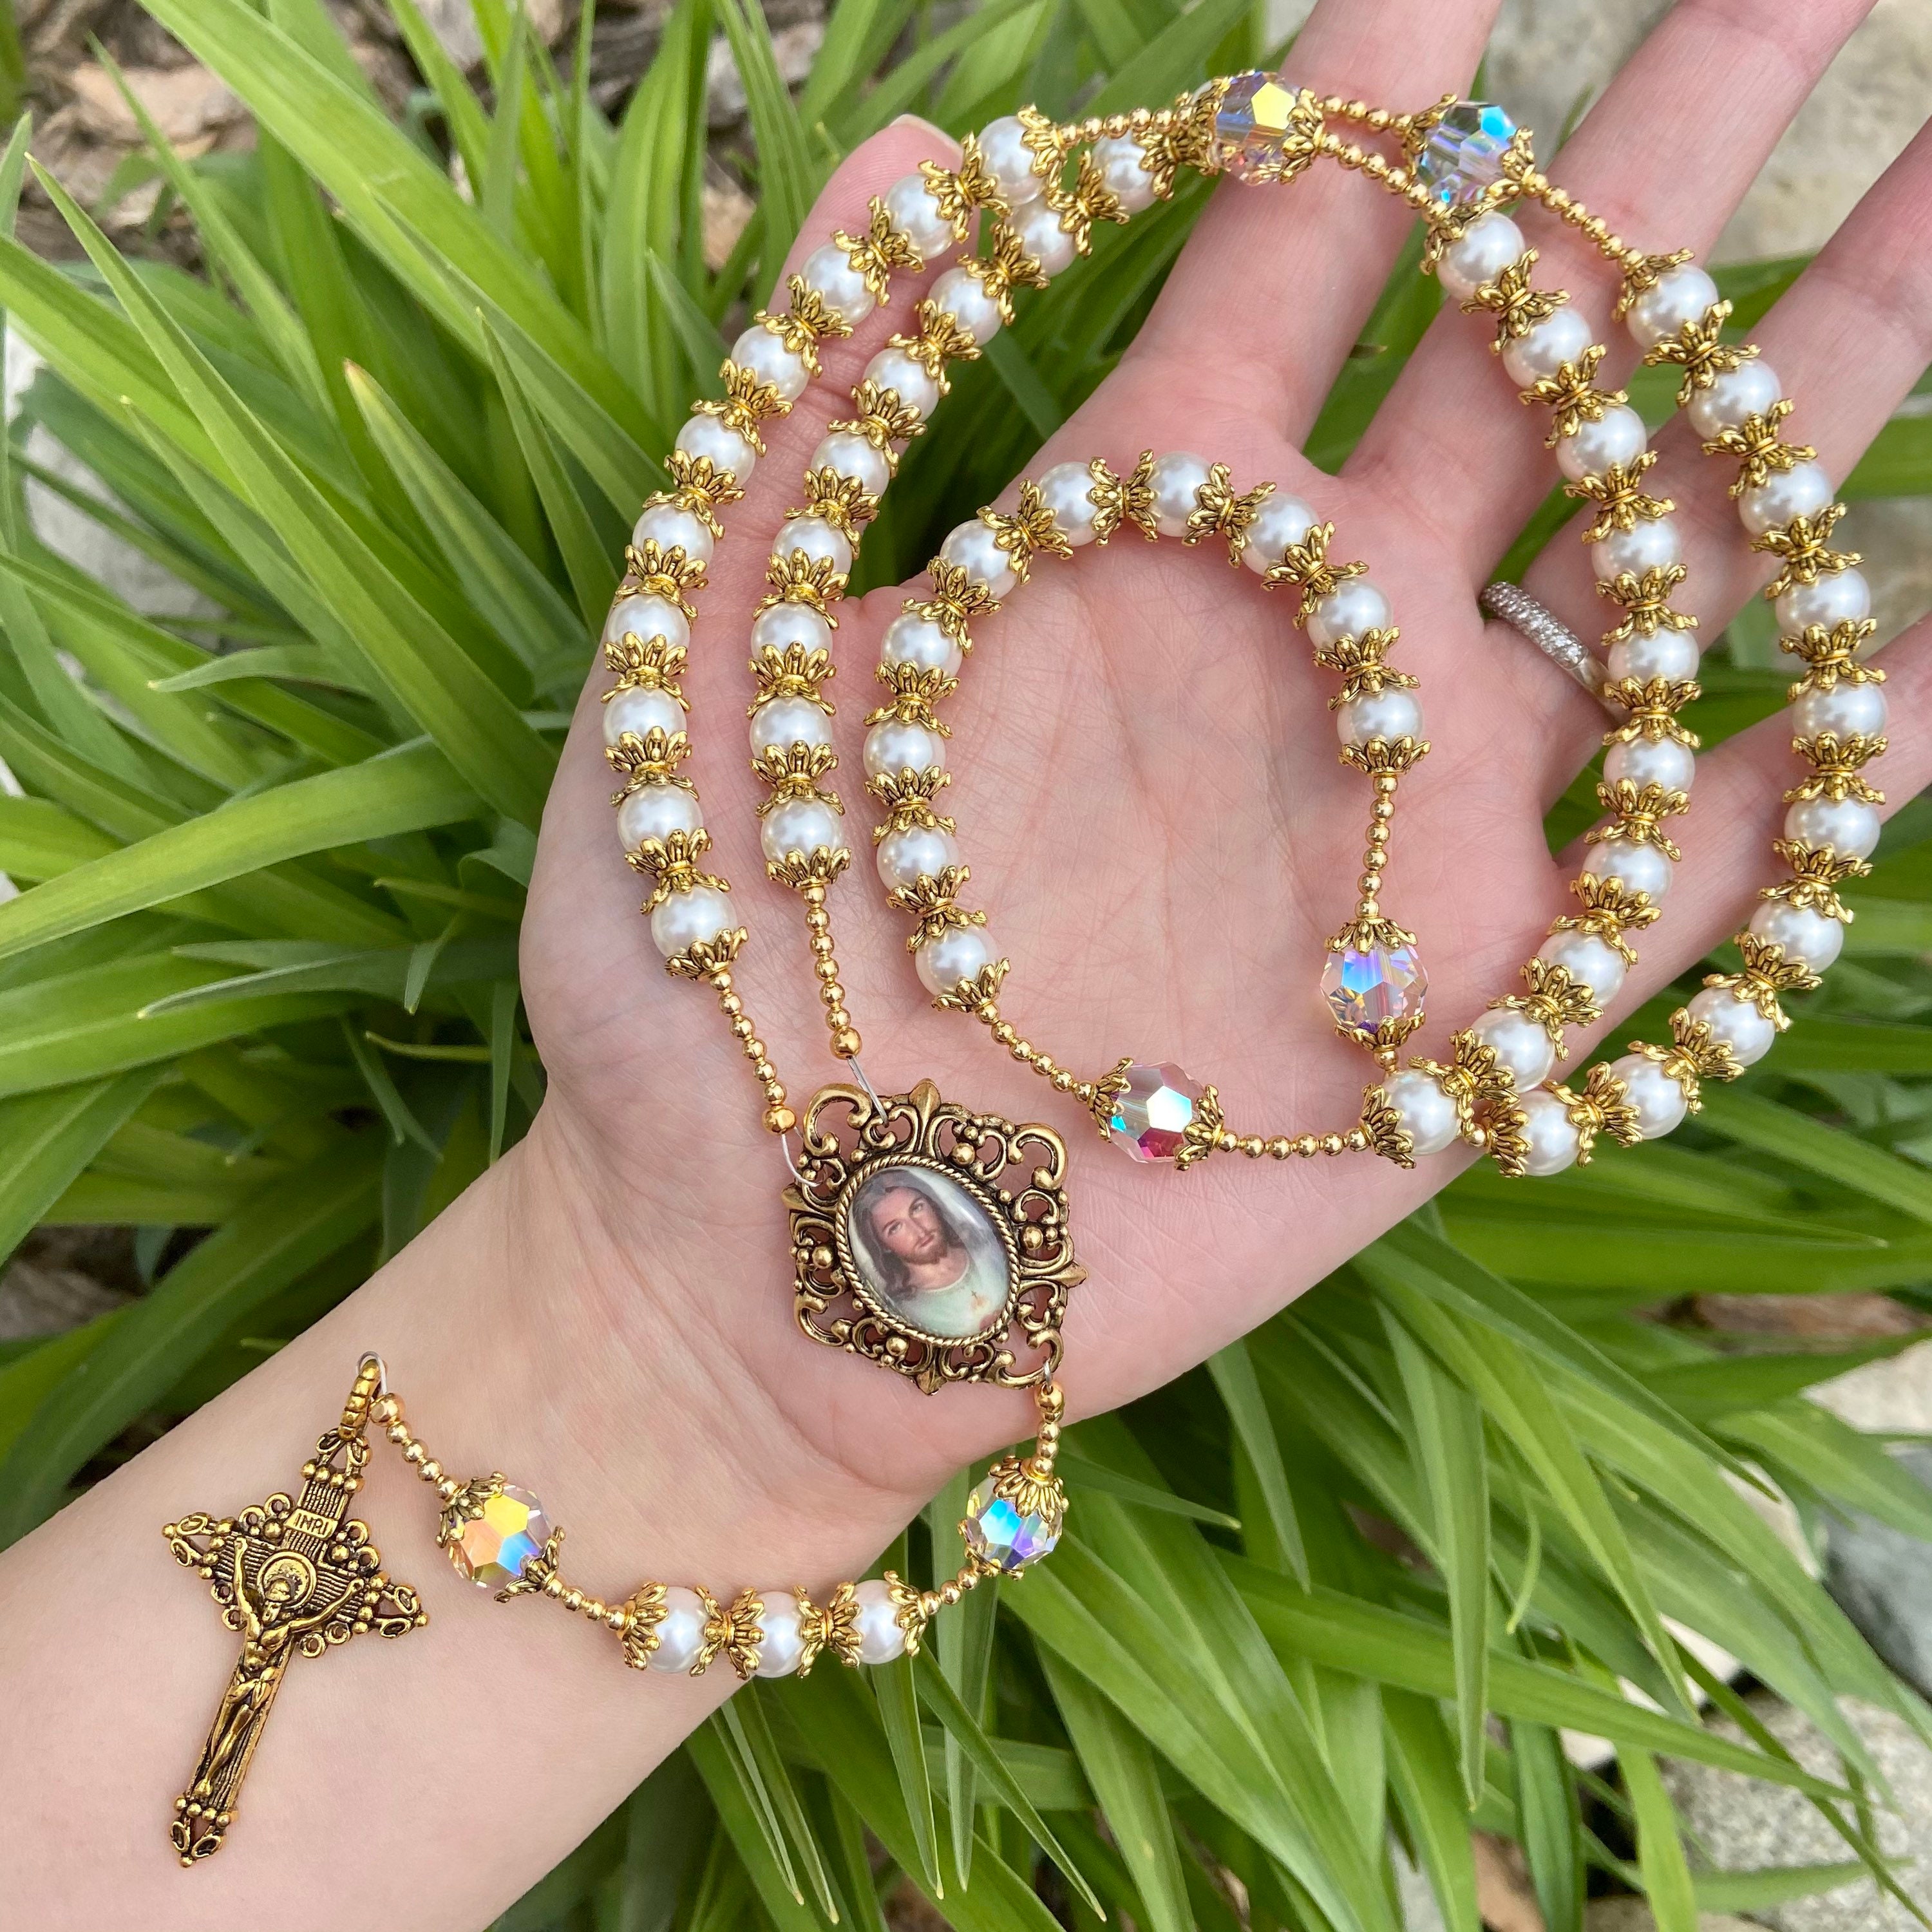 Crystal & Pearl Rosary Bead Kit - Smoky Crystal Beads & Golden Pearls